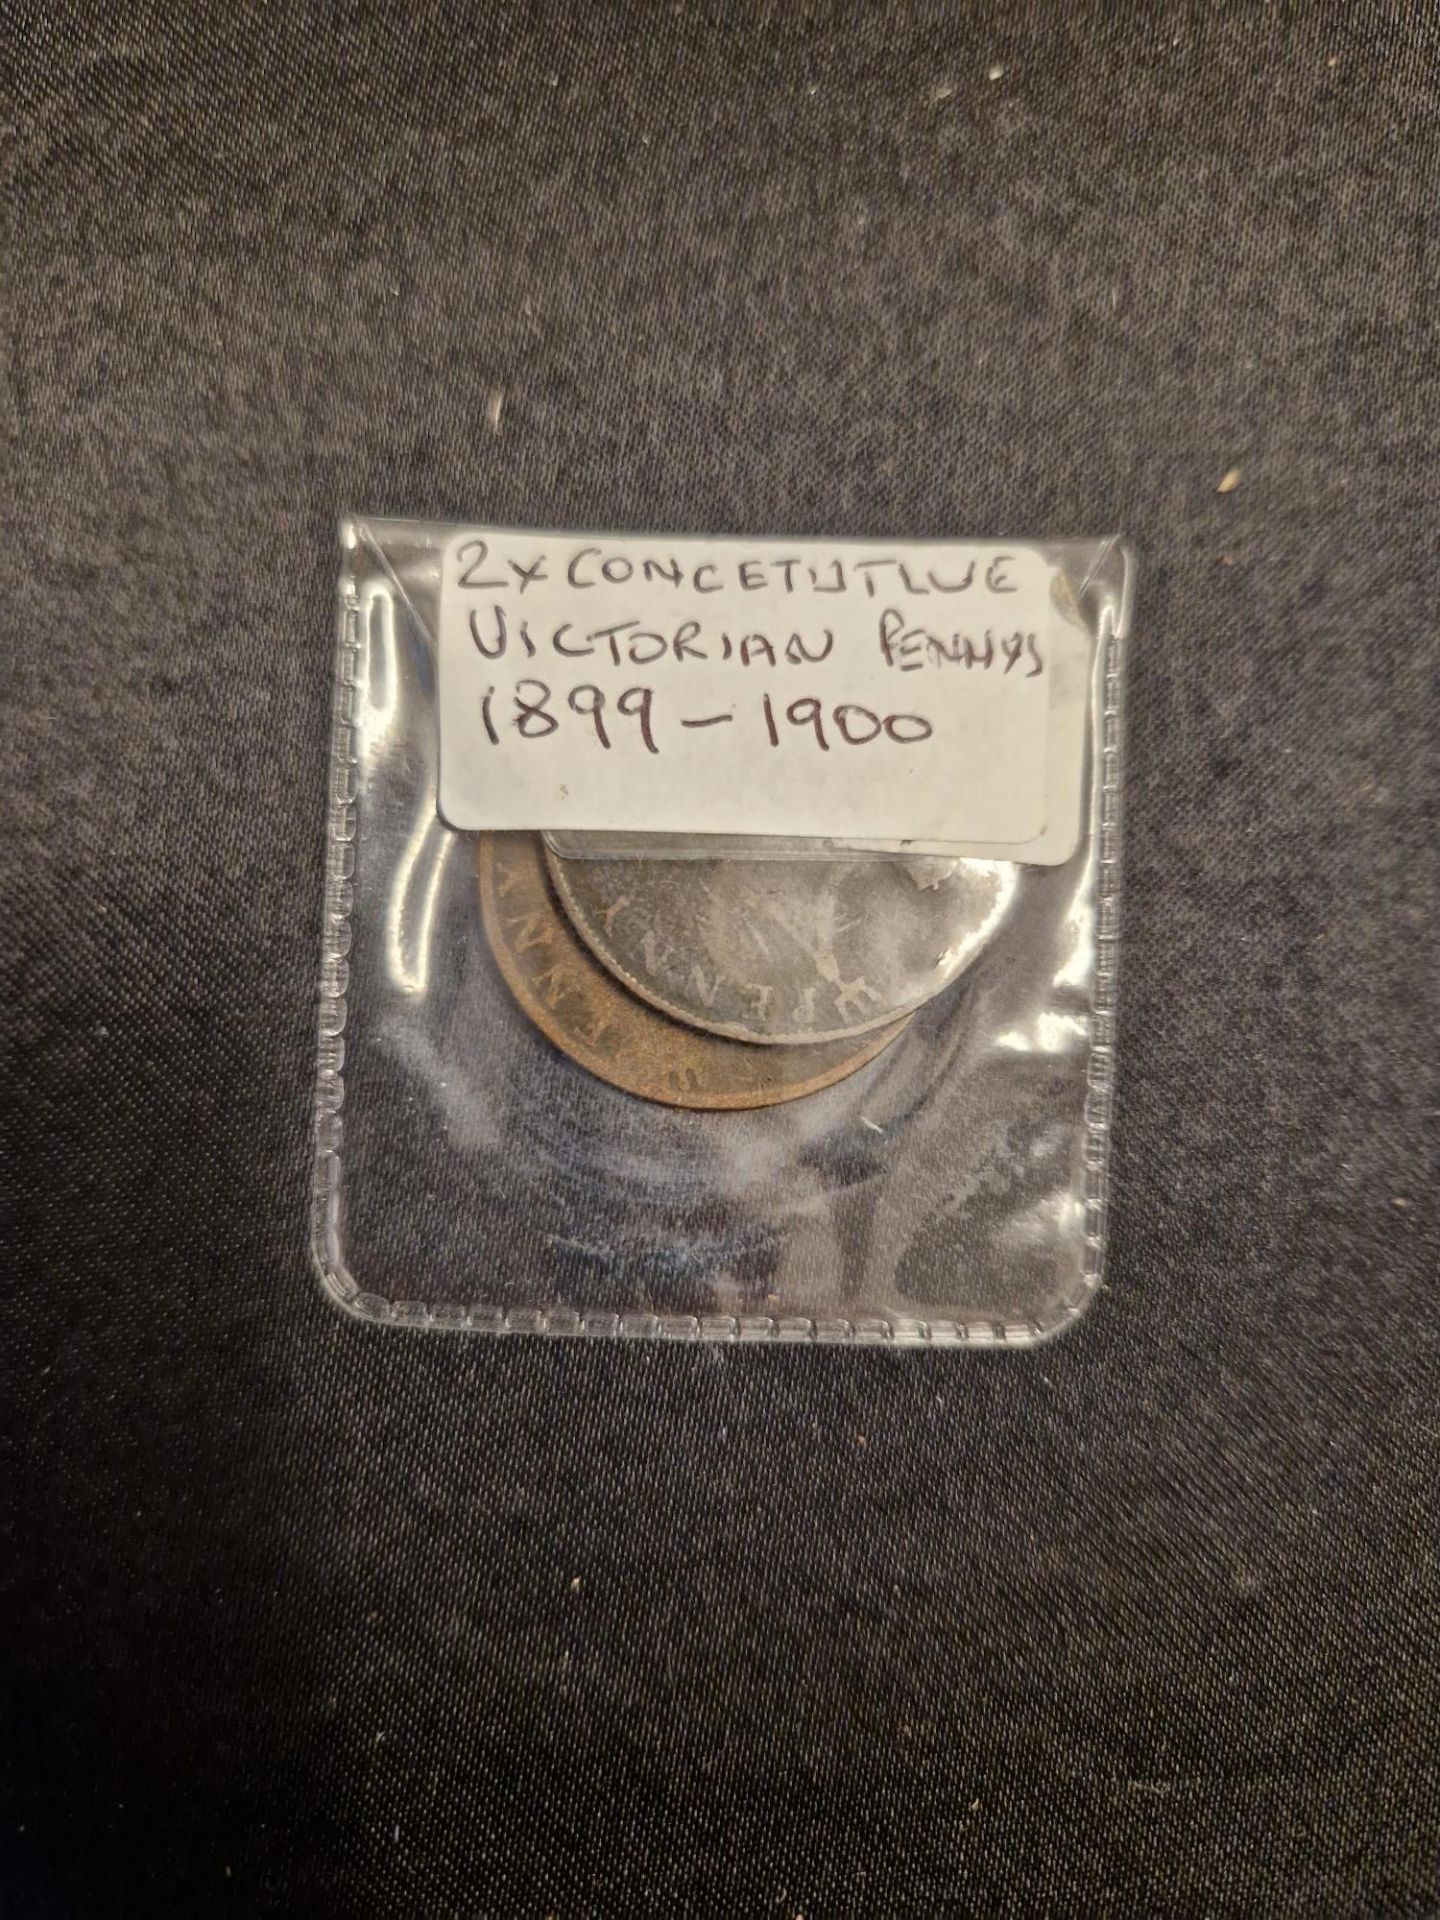 2 x concetutive victorian pennys 1899 - 1900